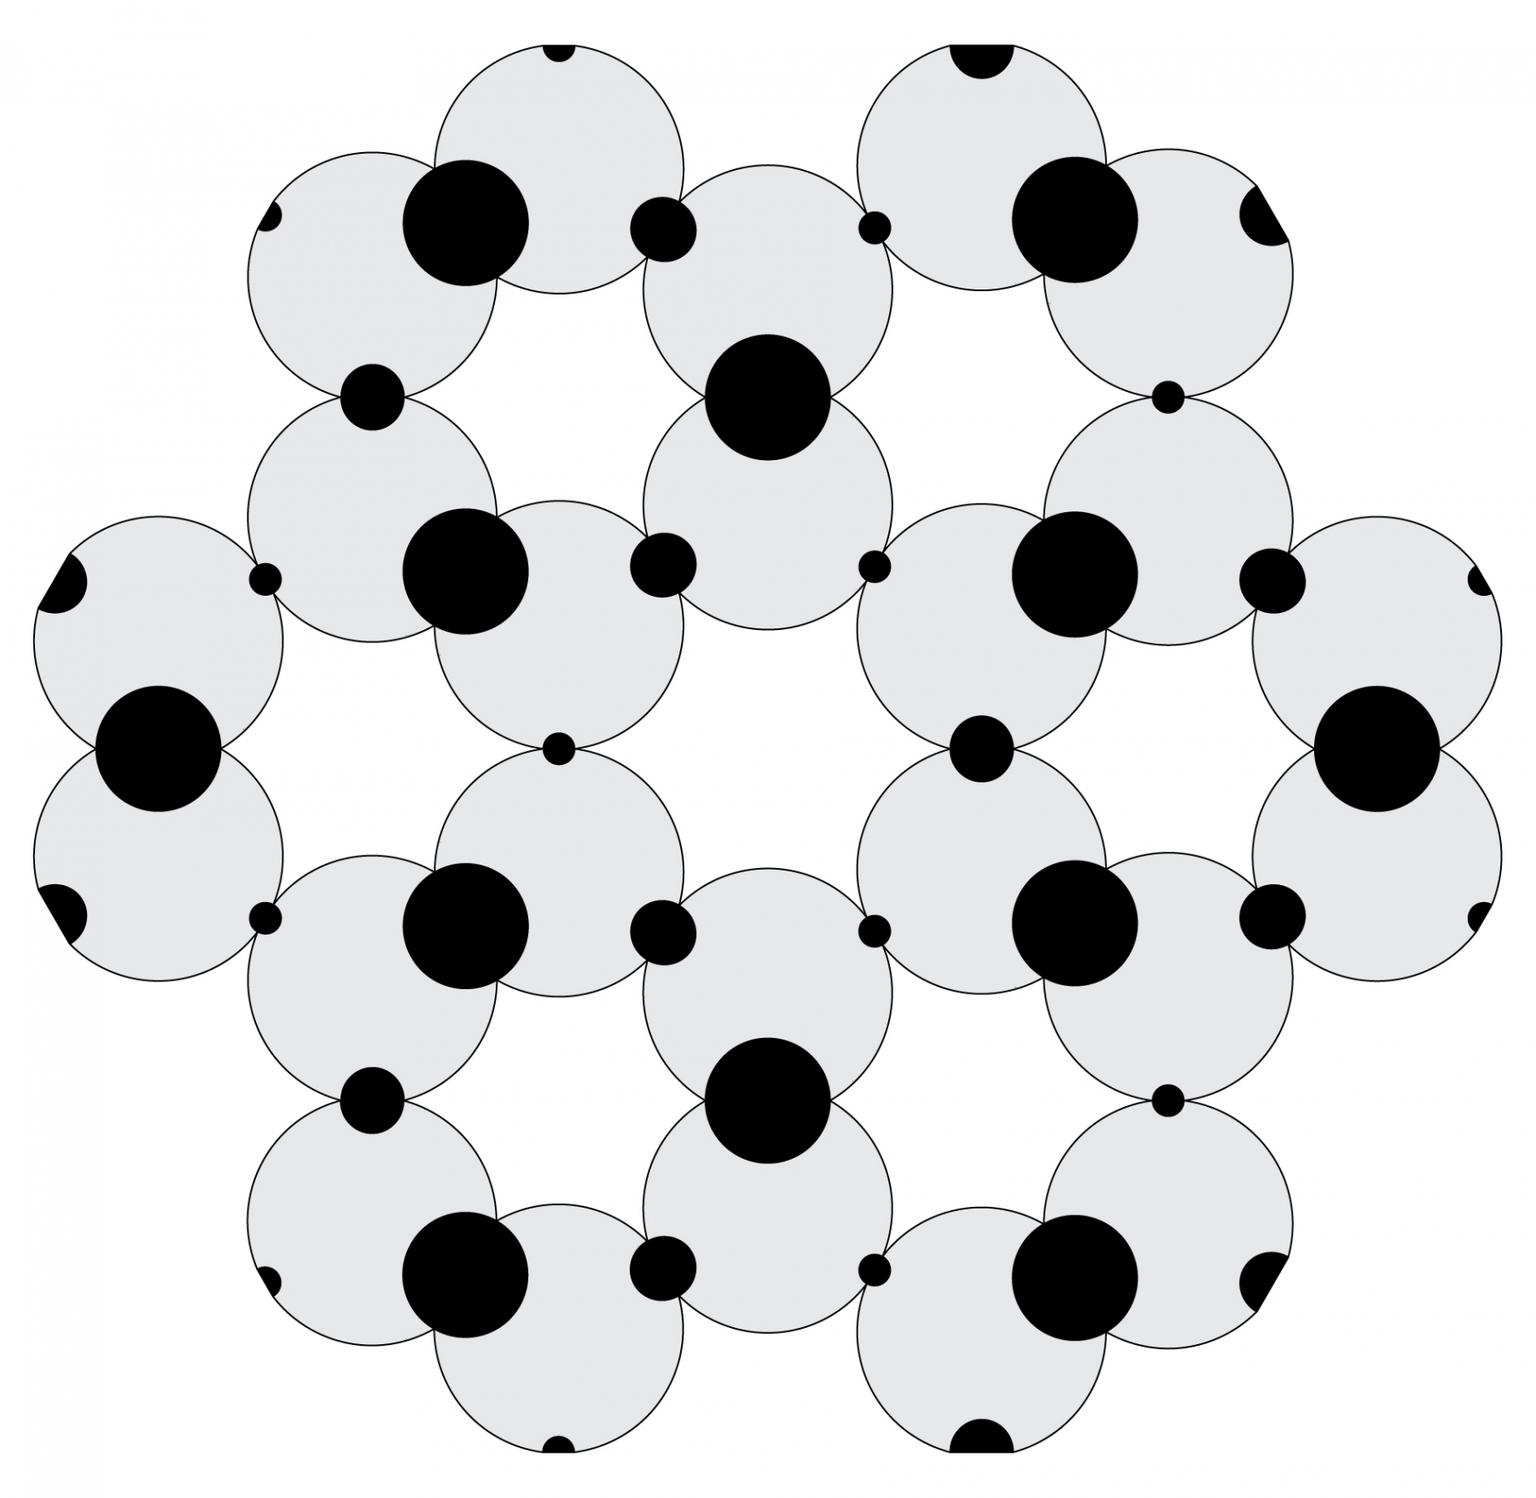 Image for entry 'PolyUniverse Circle1'